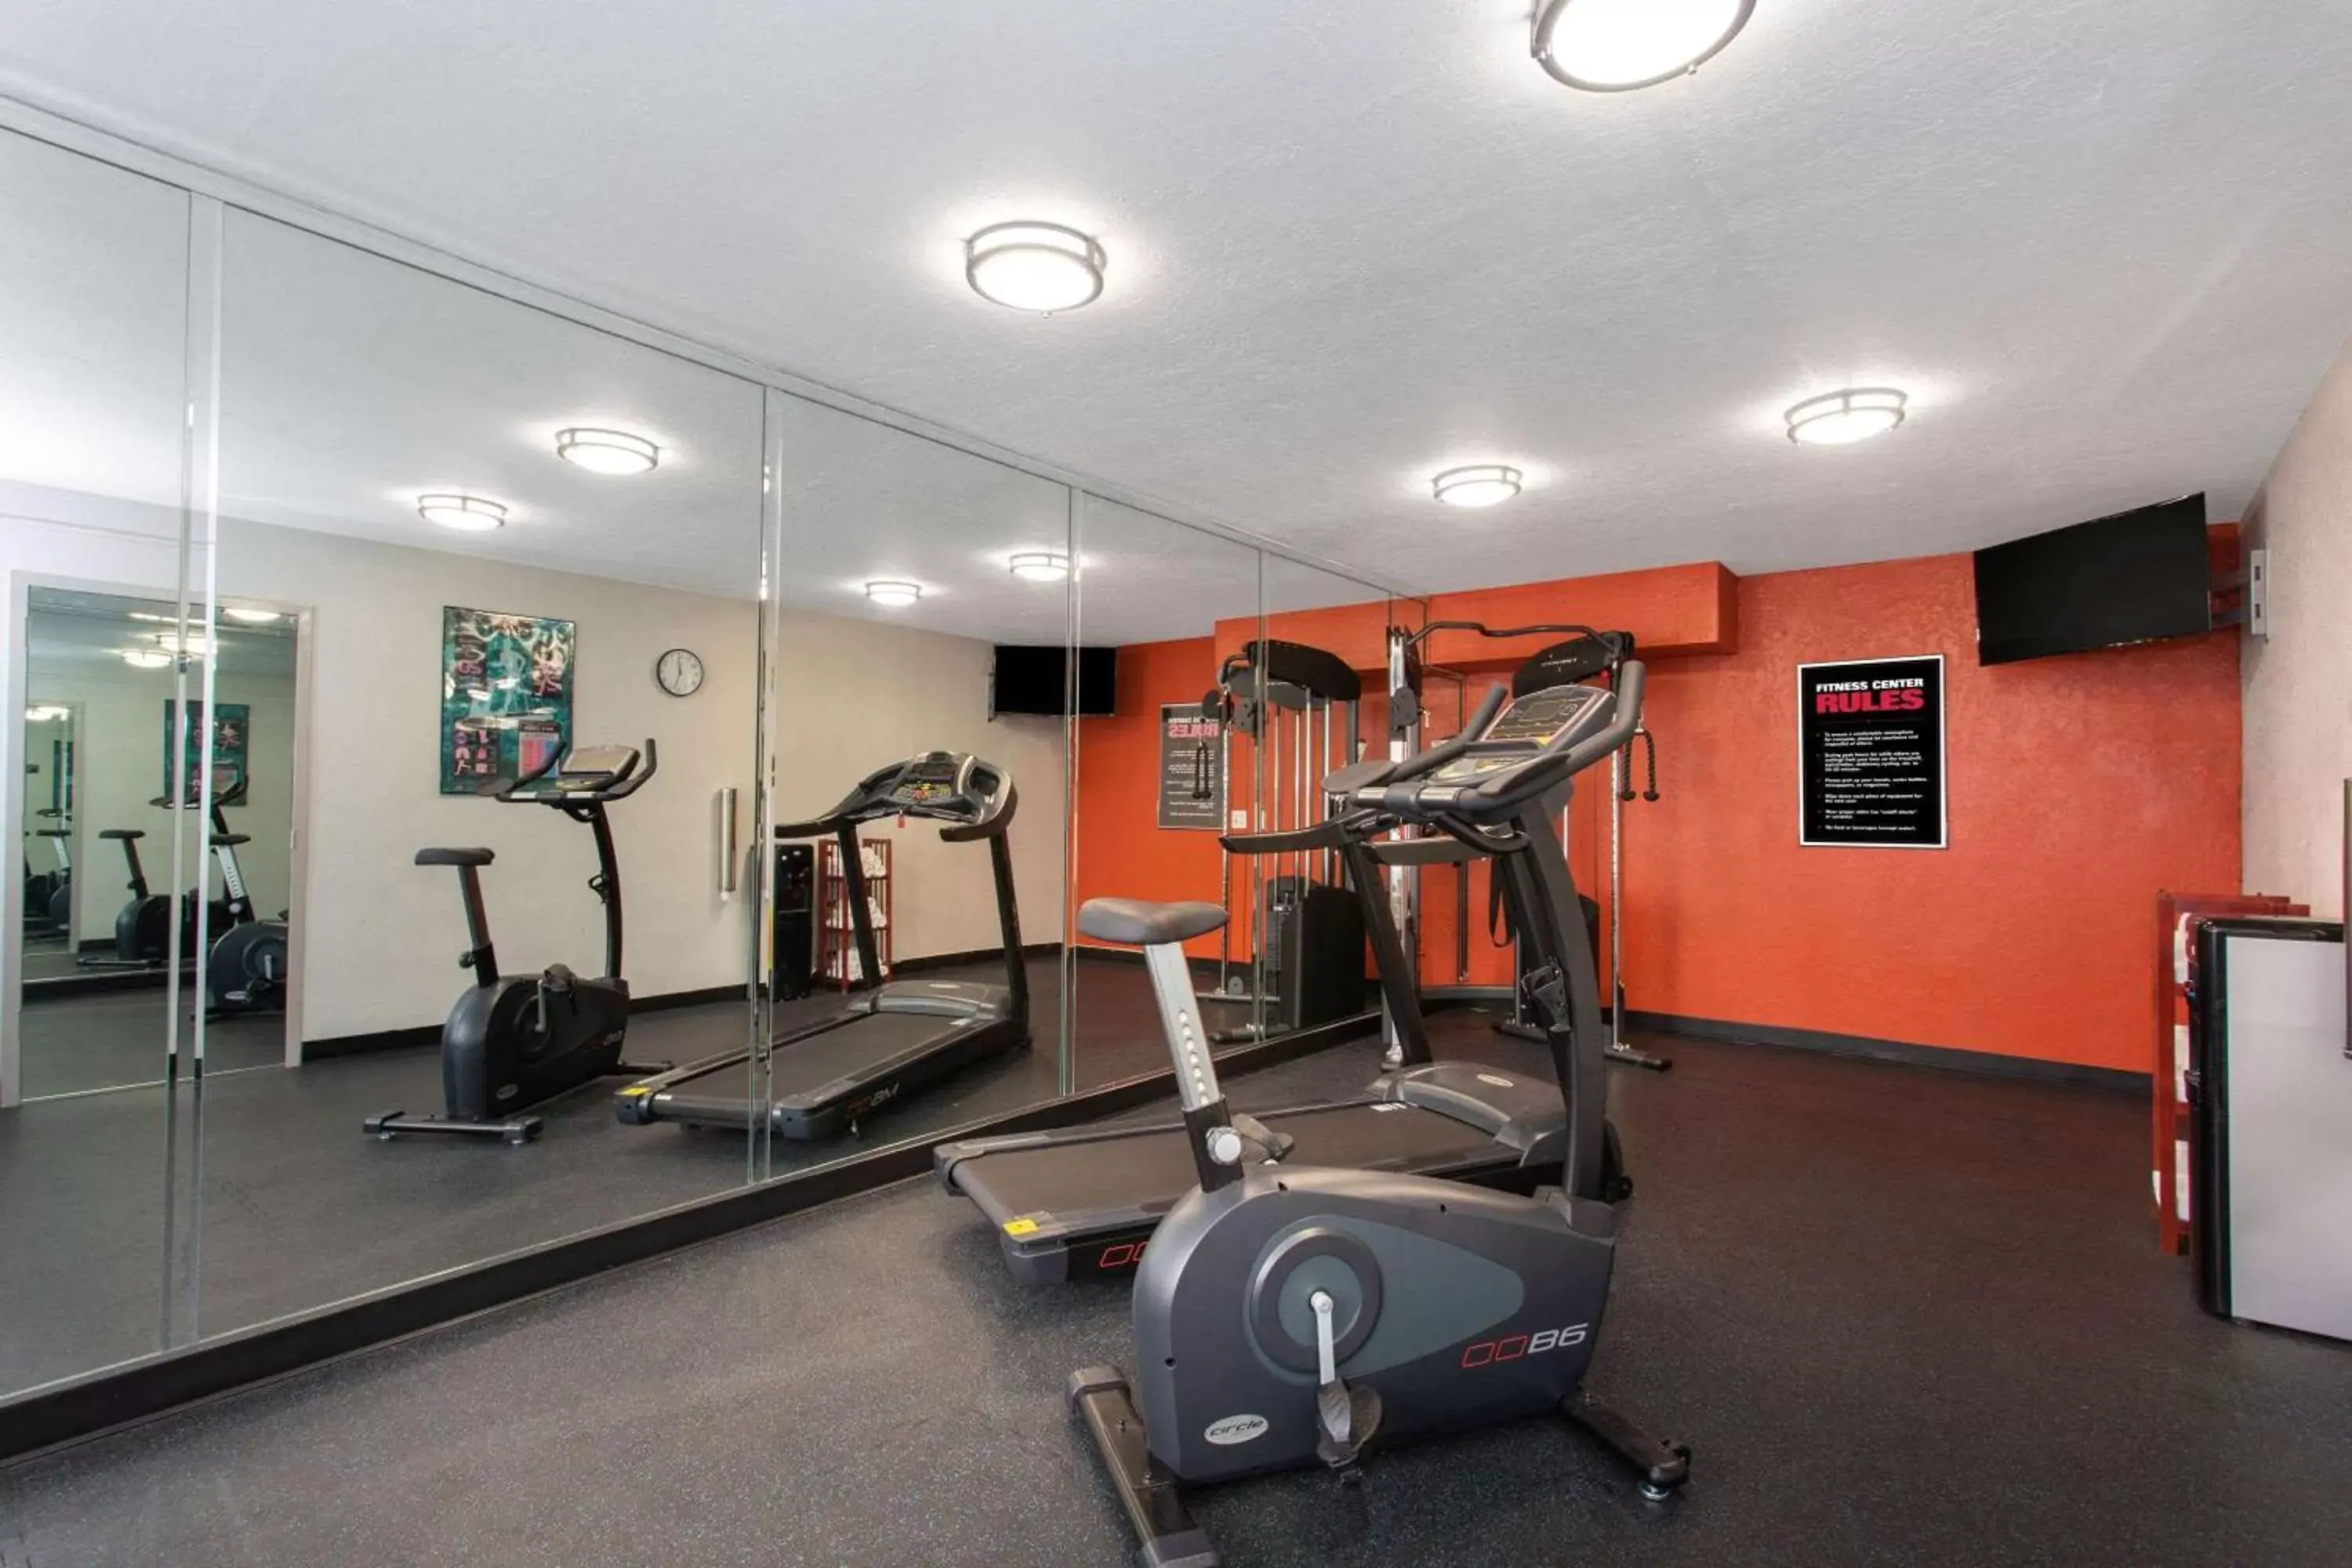 Fitness centre/facilities, Fitness Center/Facilities in Days Inn by Wyndham Orlando Conv. Center/International Dr